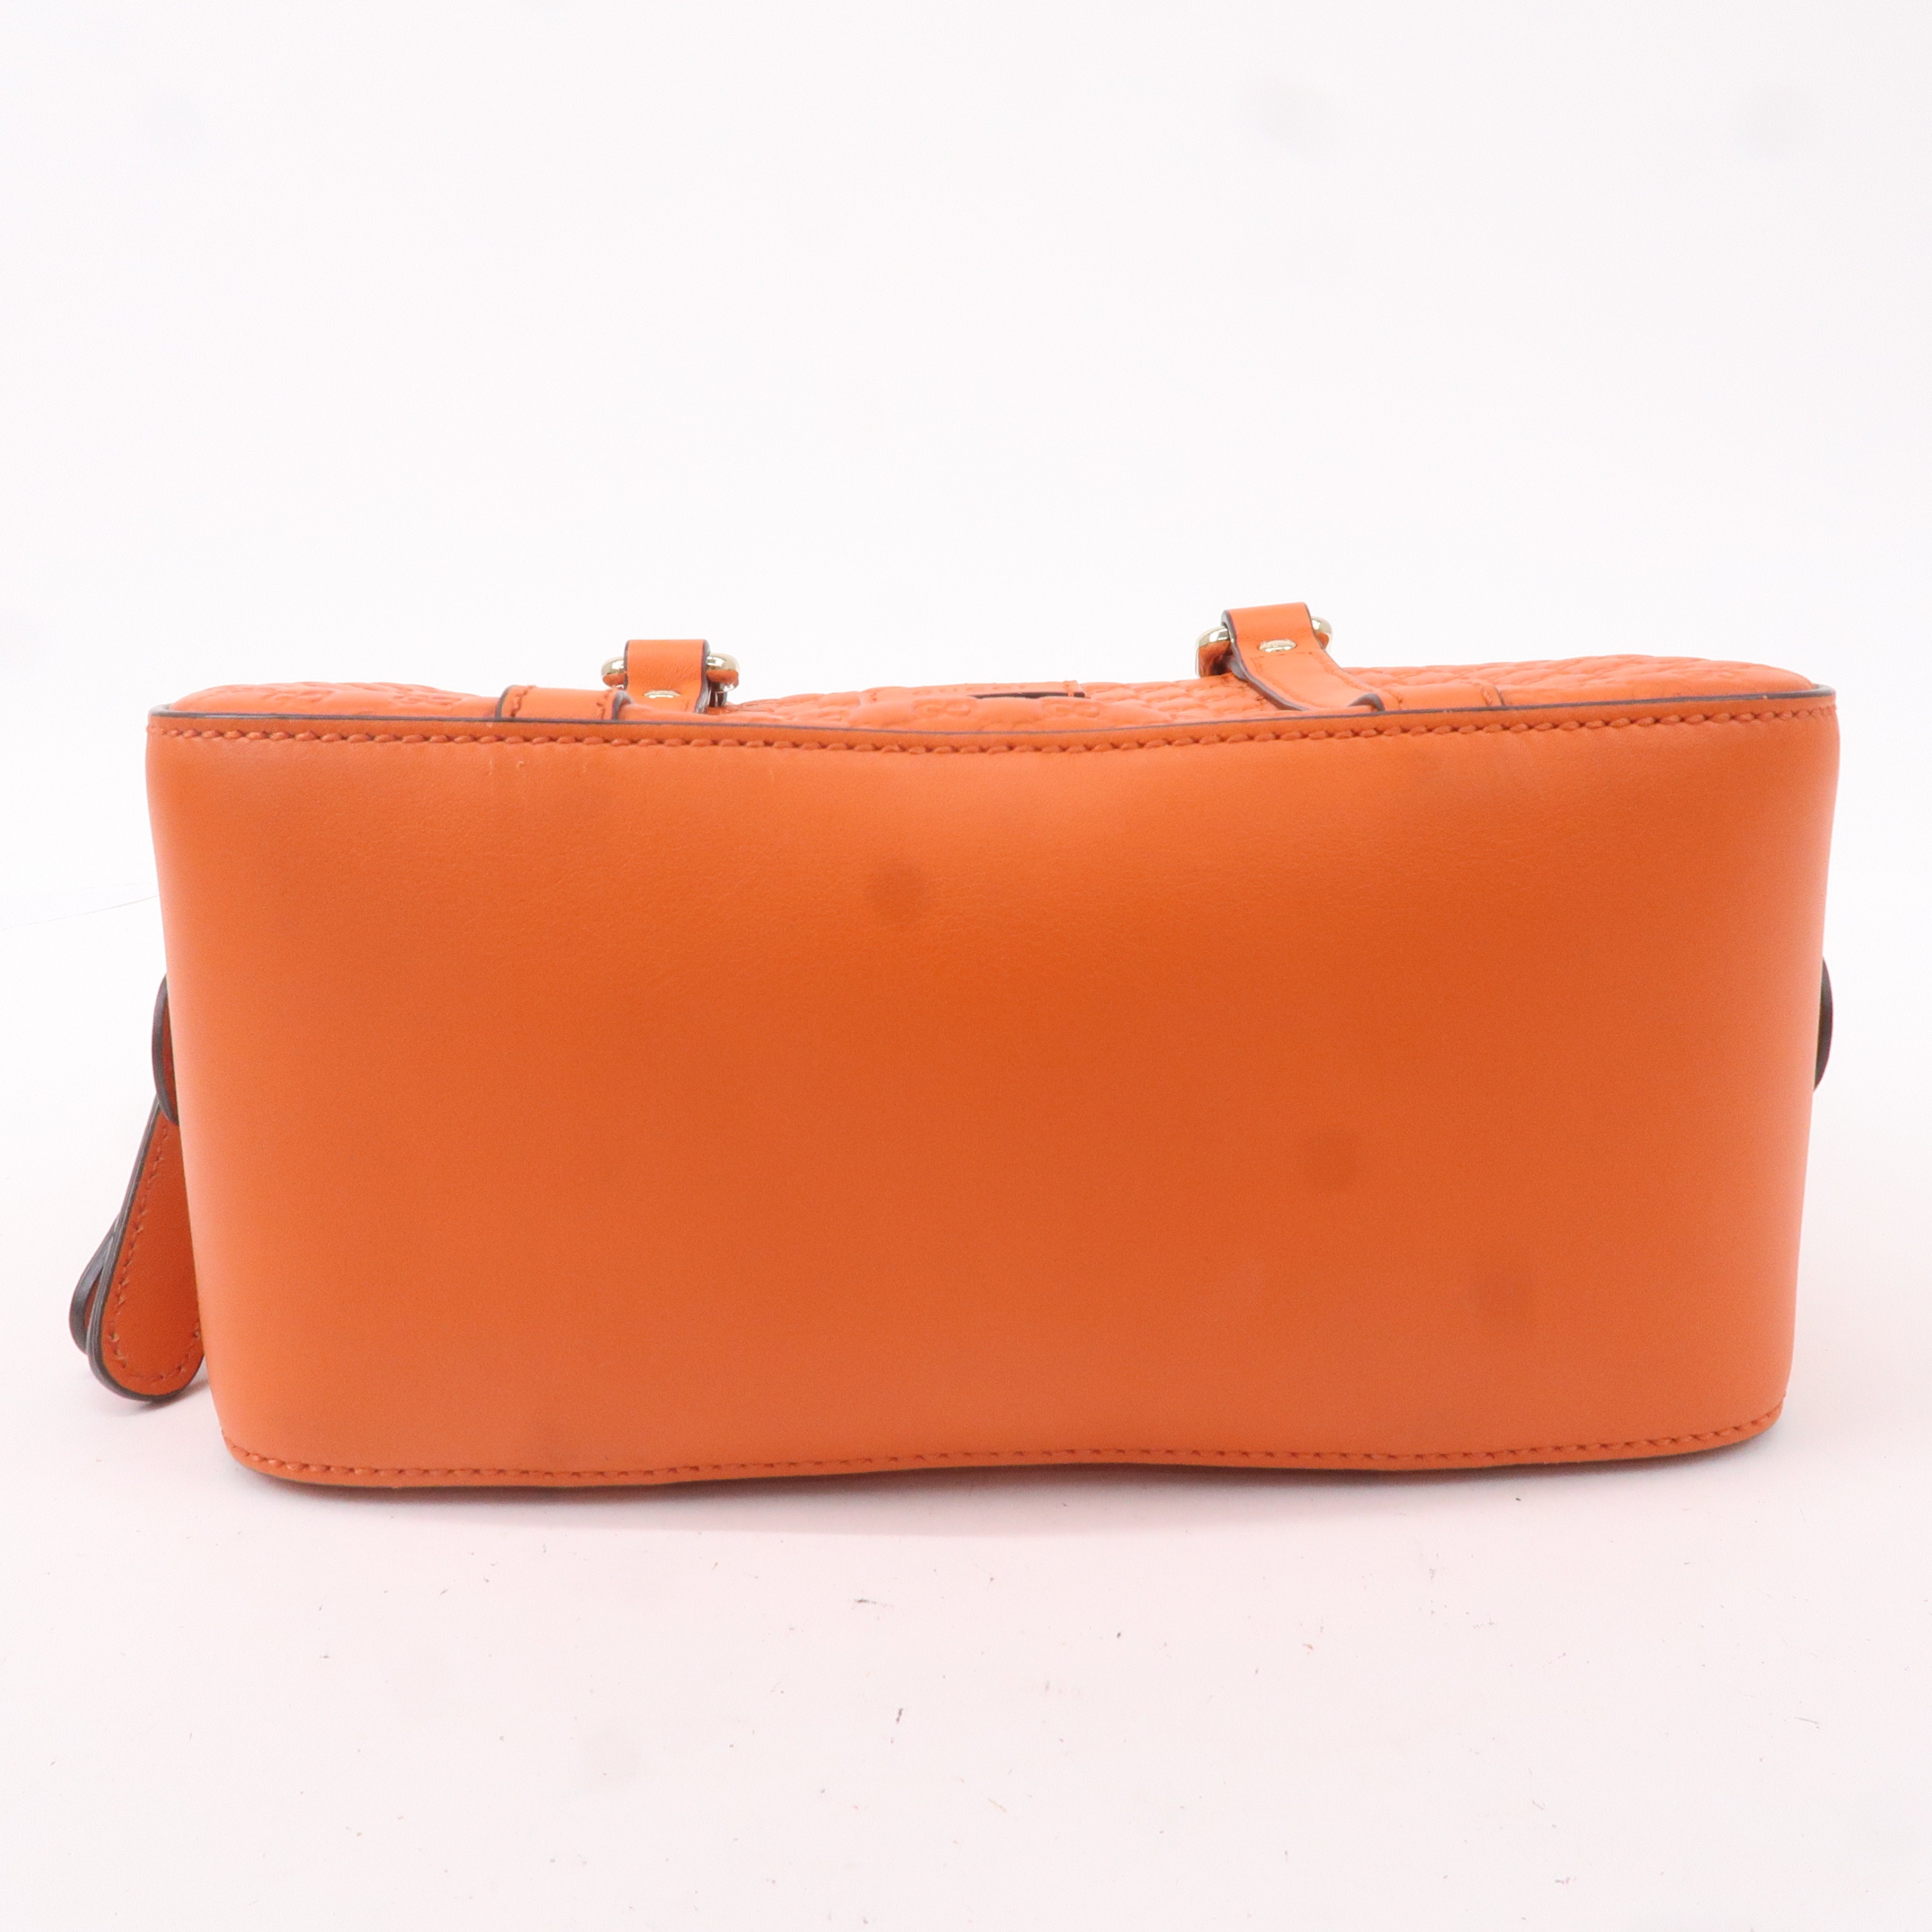 Gucci Soho small Disco Shoulder Bag orange rare | eBay